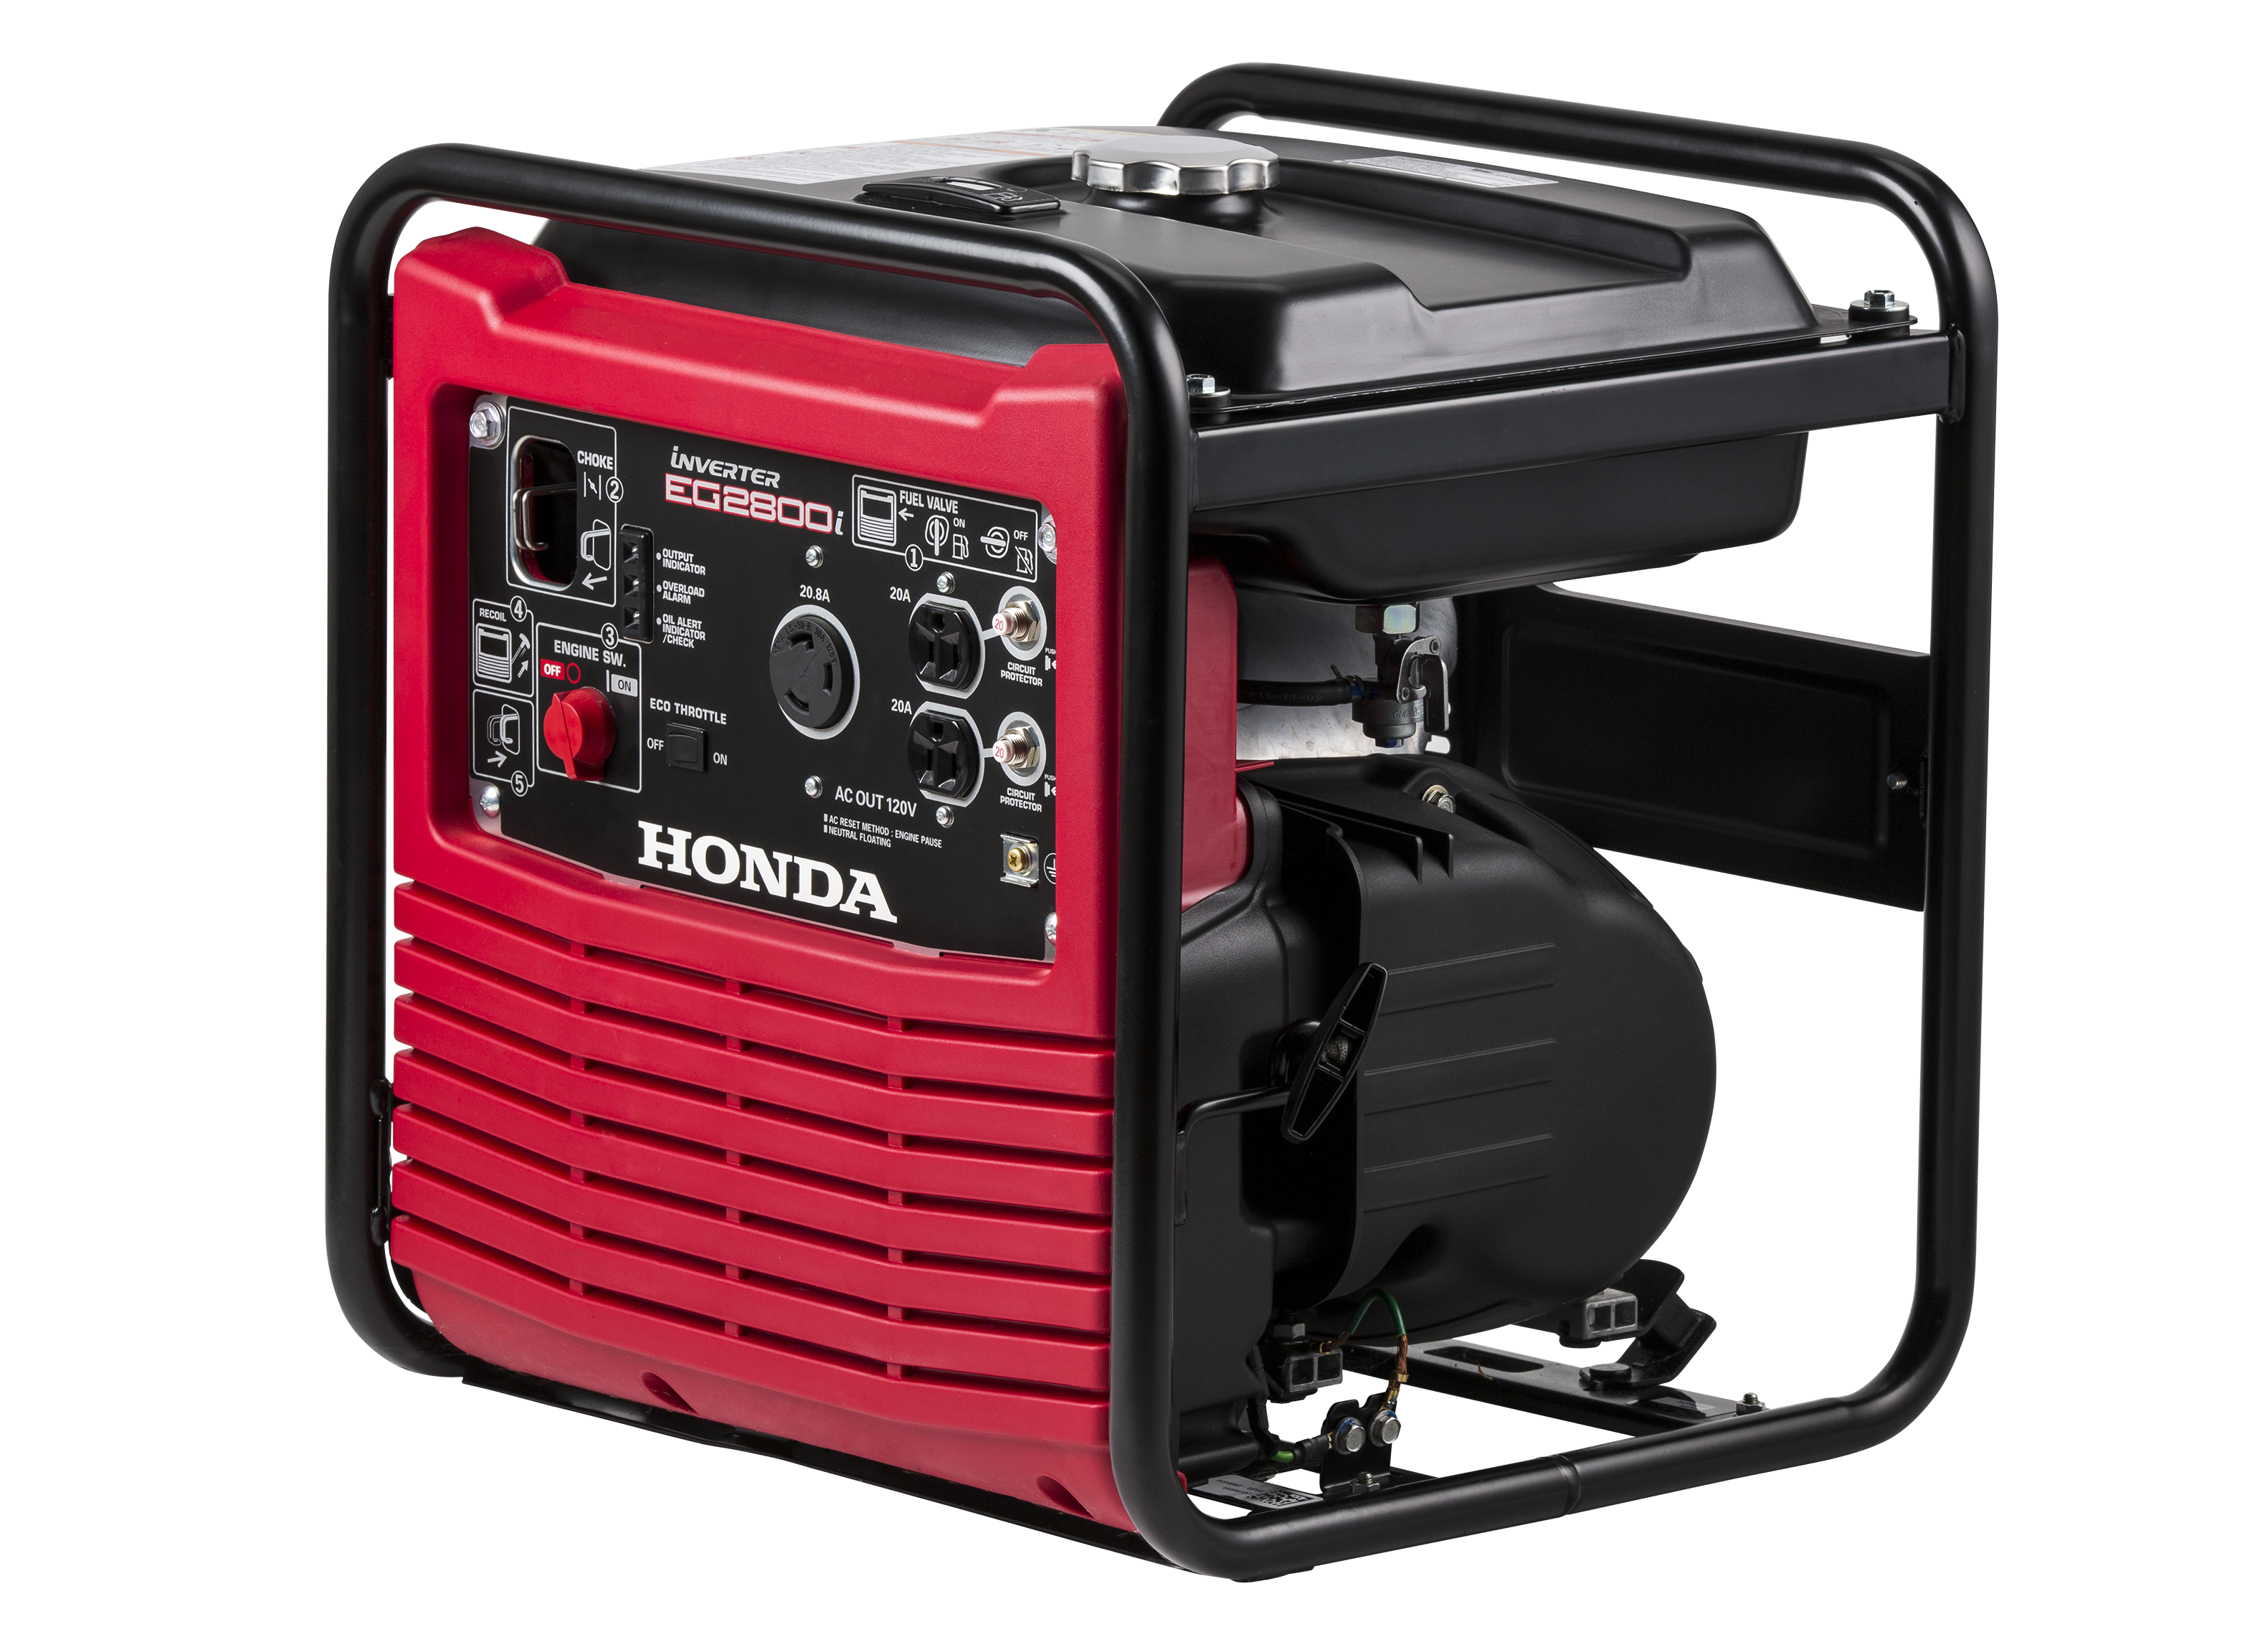 Hour meter for Honda  Honda EB2800i 2800 watt inverter generator 